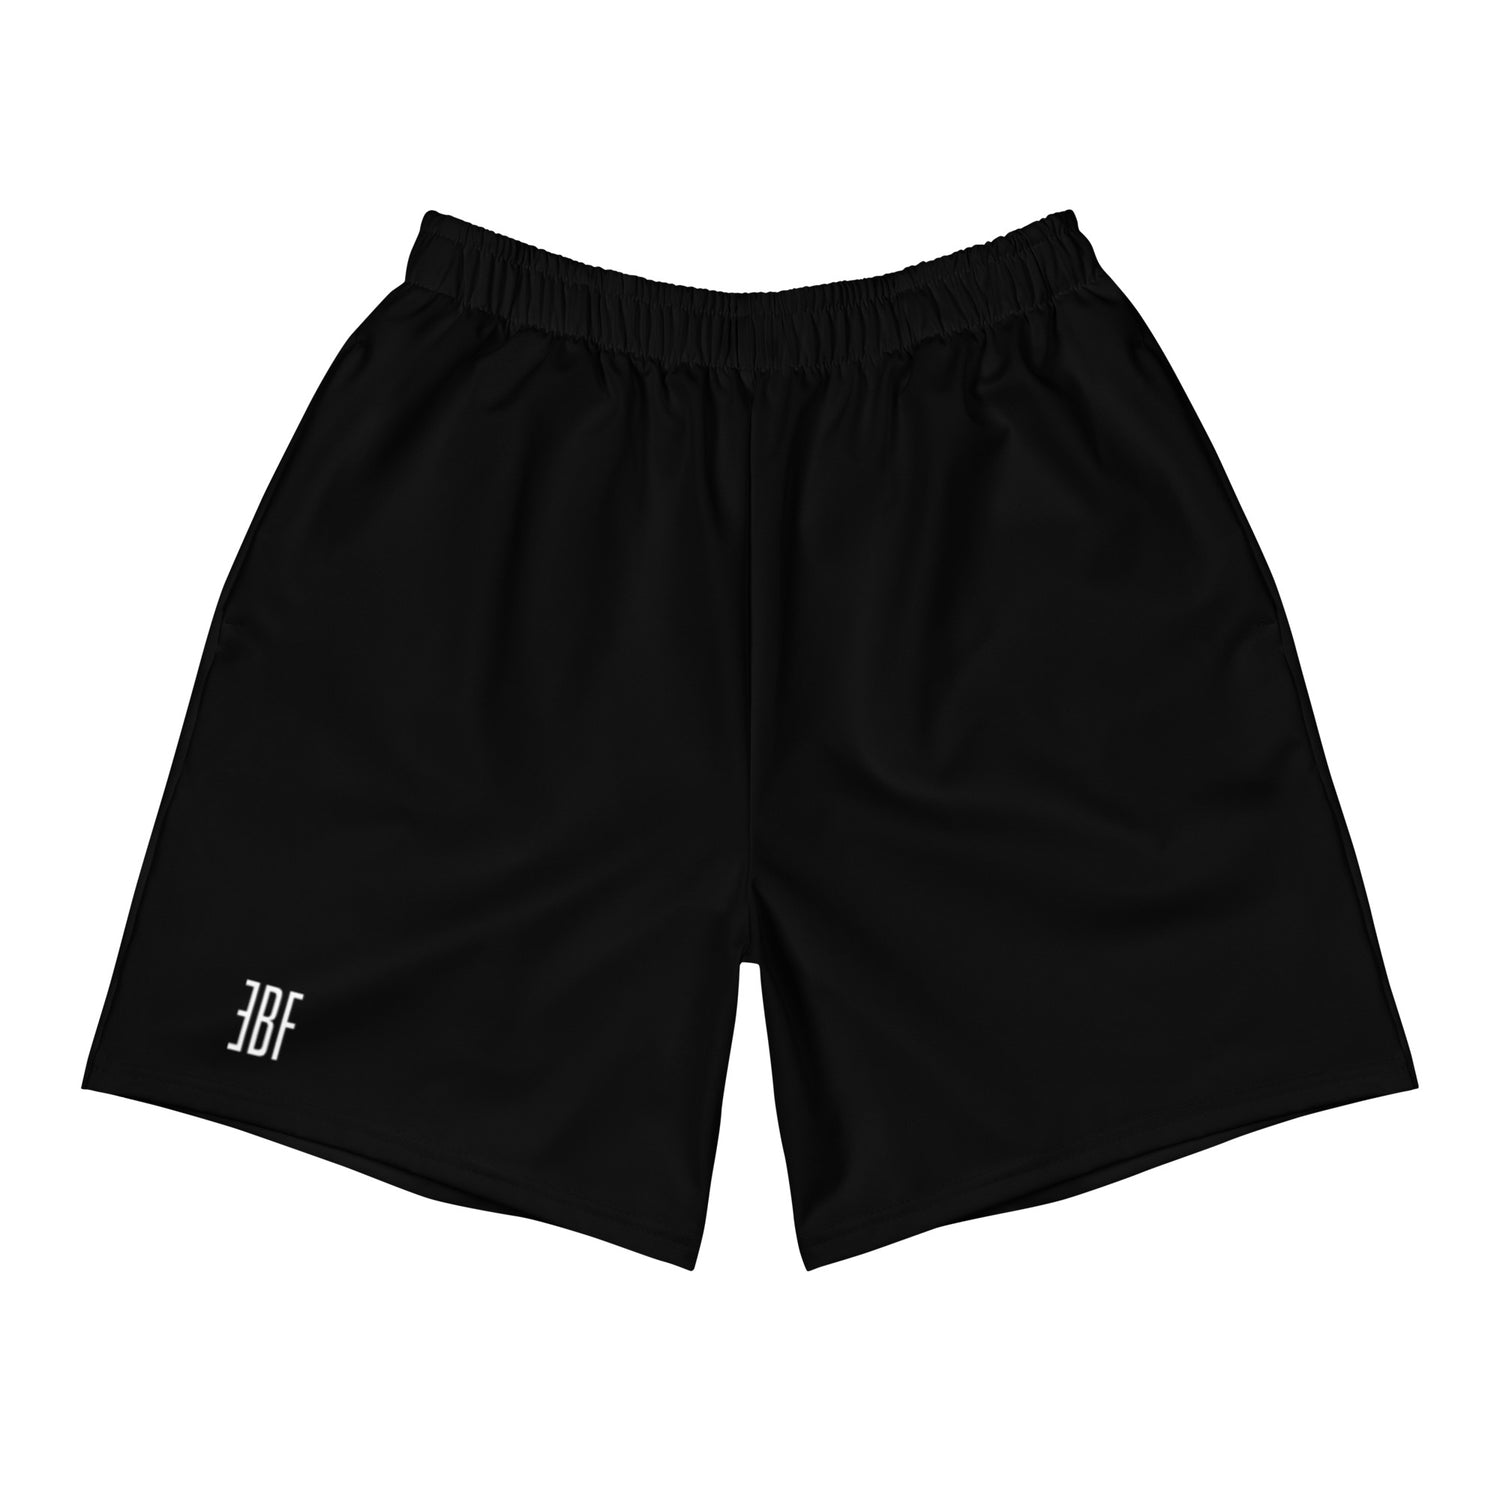 Men's Recycled Athletic Shorts EBF